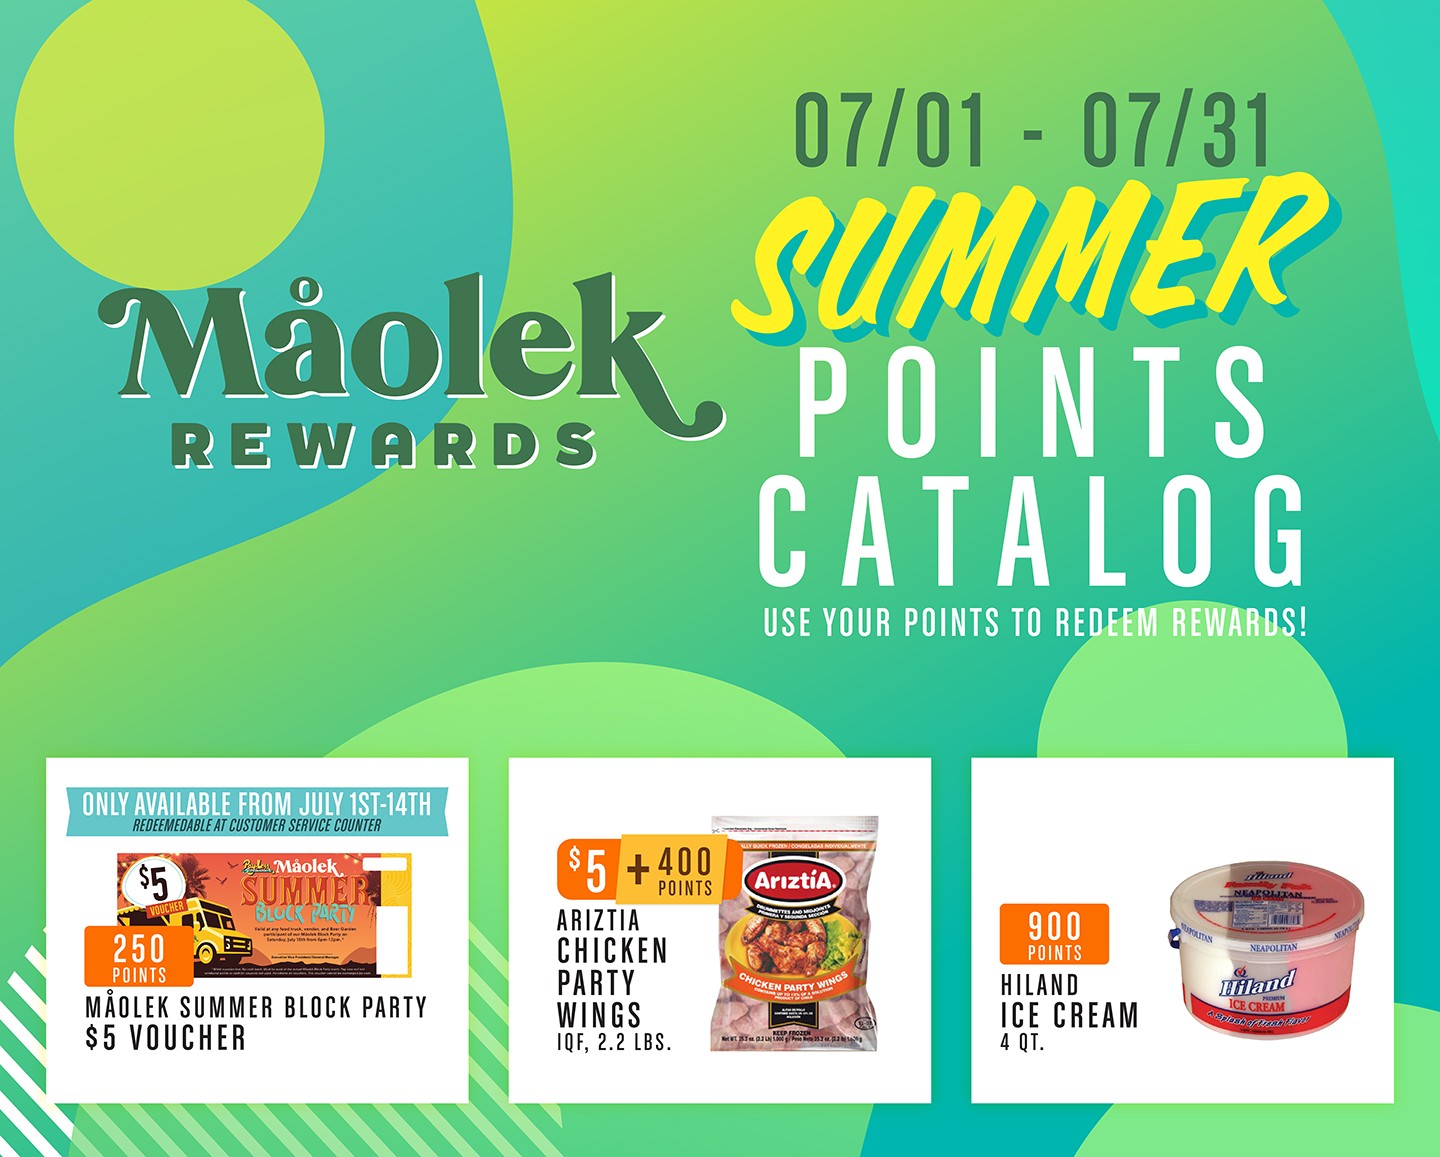 Måolek Reward Points Catalog